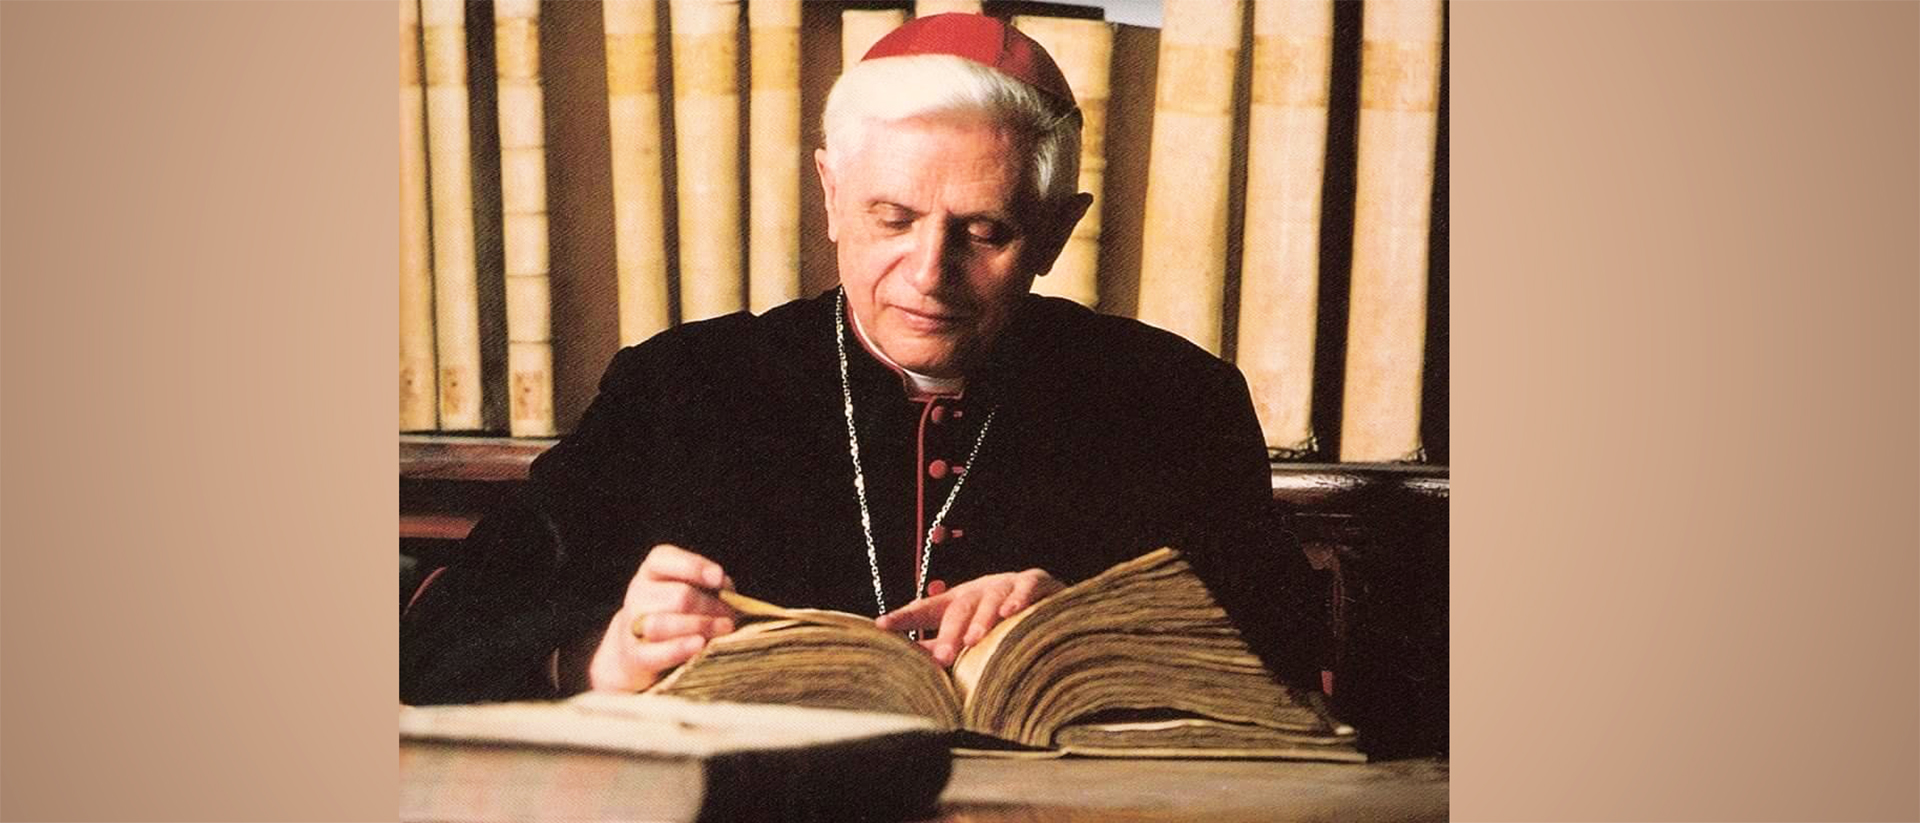 Le cardinal Joseph Ratzinger | Flickr - Levan Ramishvili - domaine public
